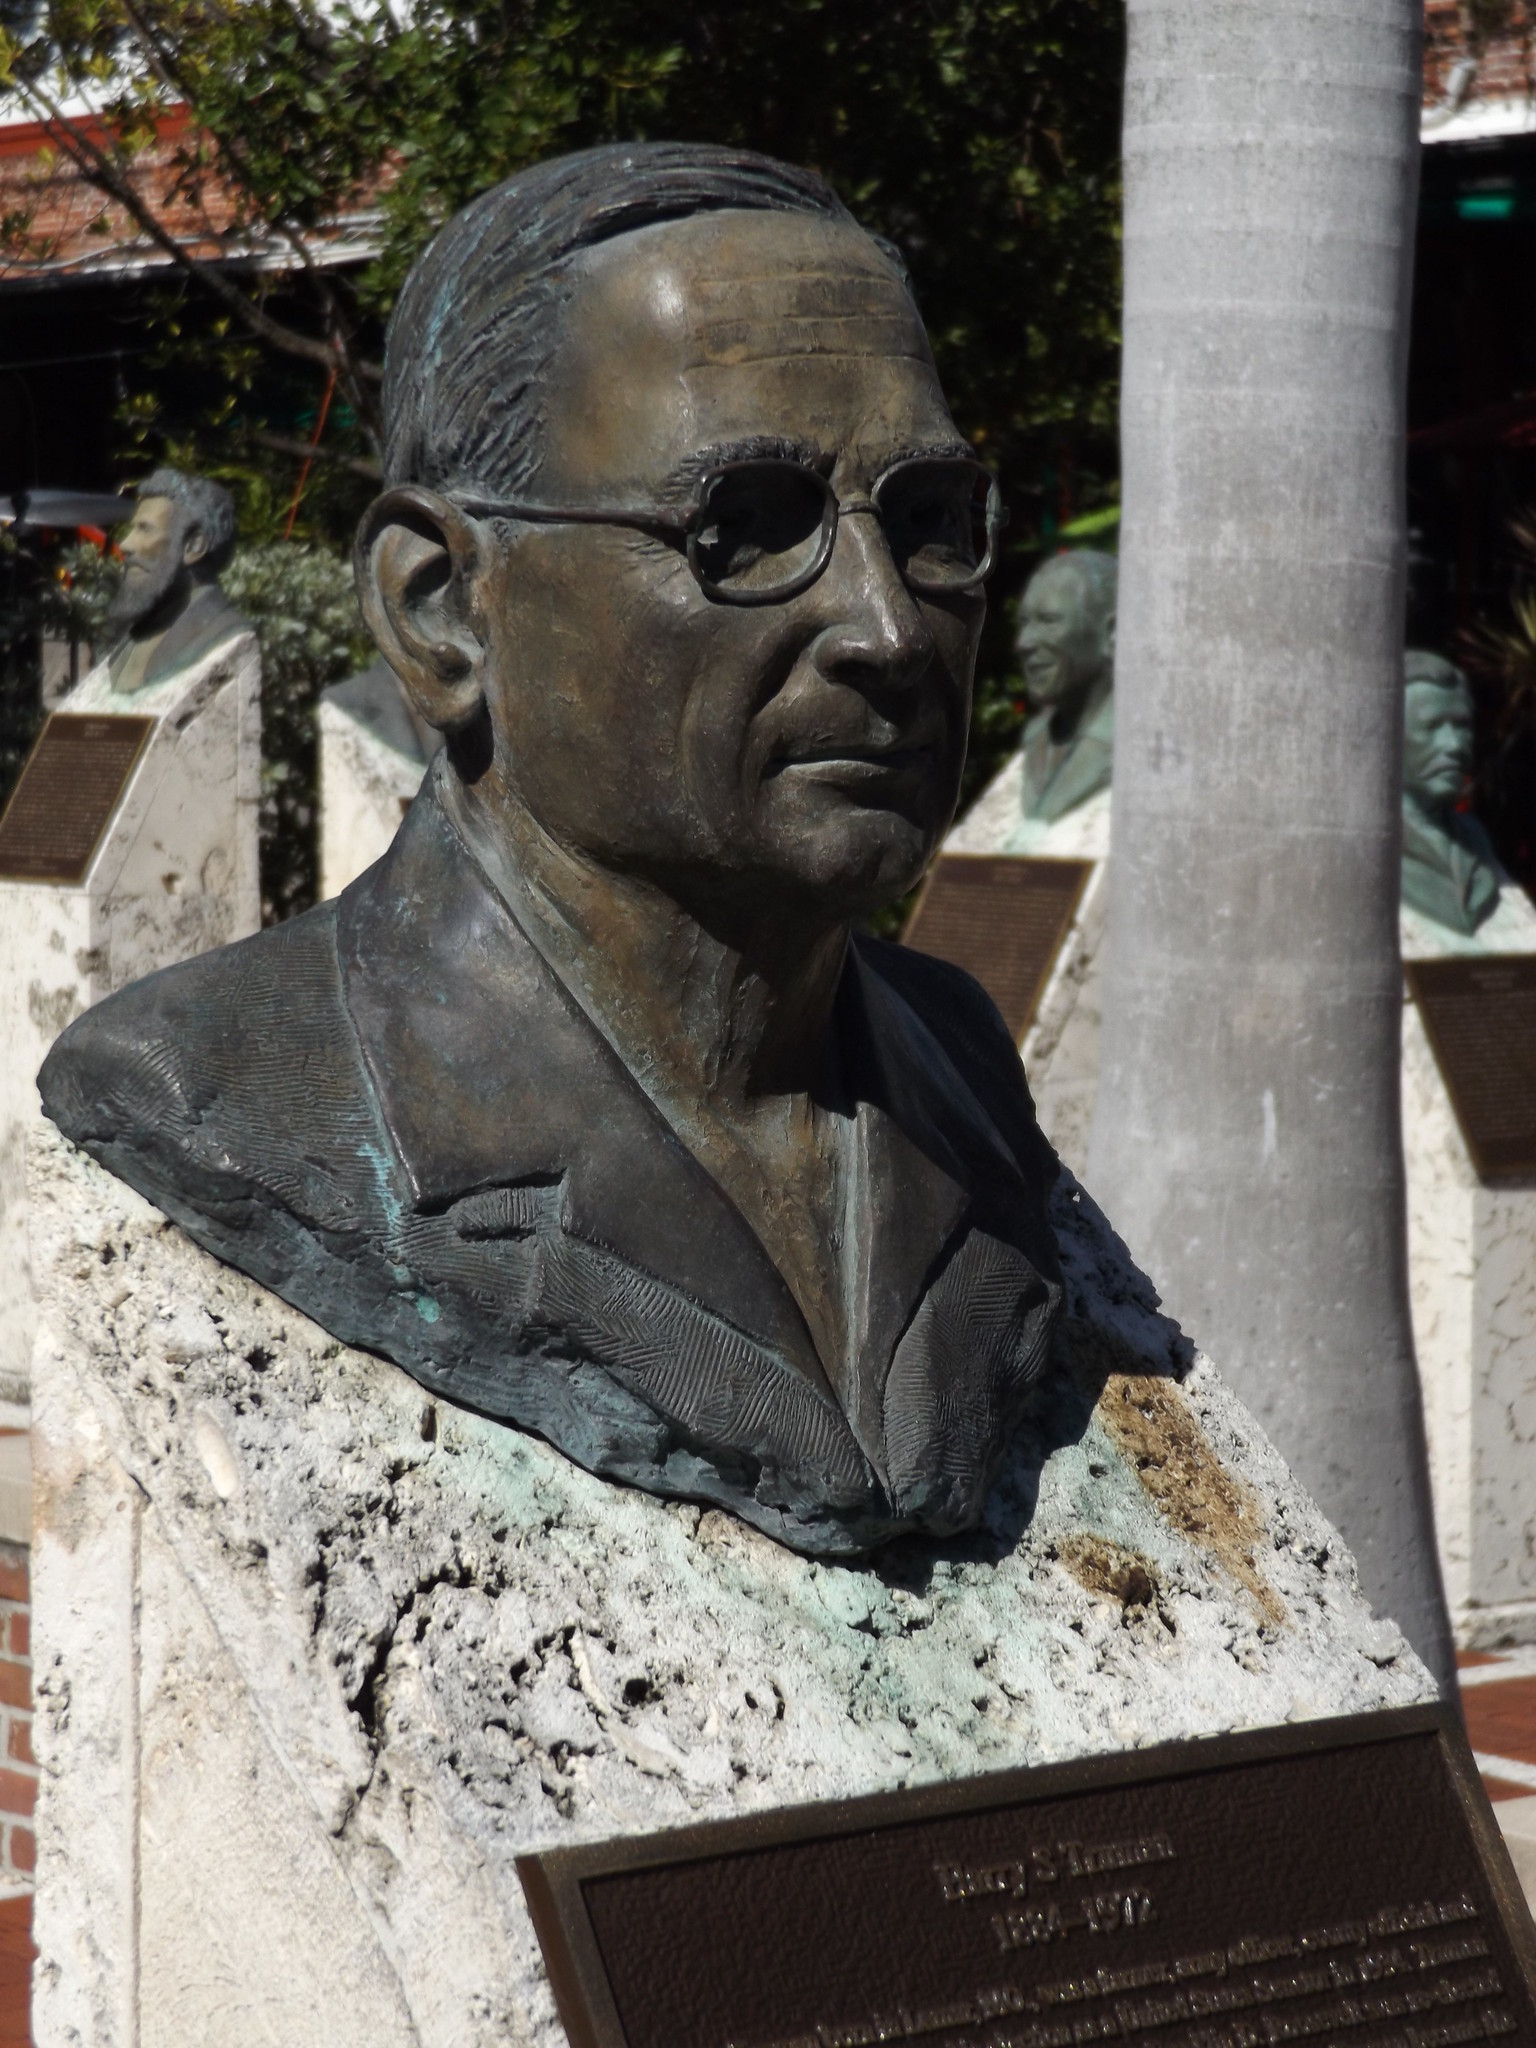 Bust of President Harry S Truman, Key West, Florida, United States, 28 December 2019